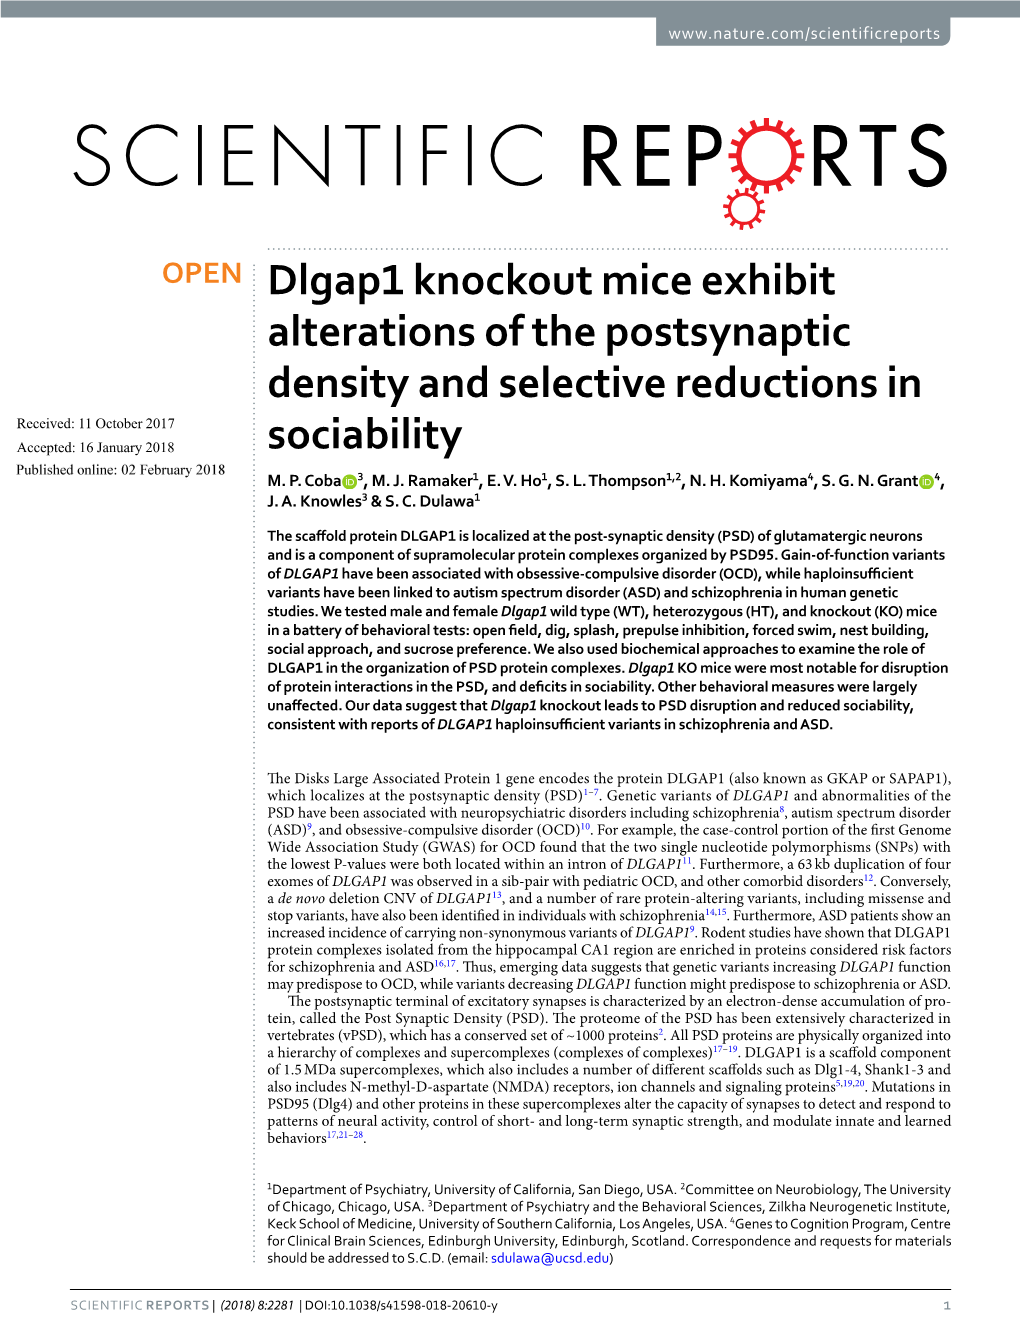 Dlgap1 Knockout Mice Exhibit Alterations of the Postsynaptic